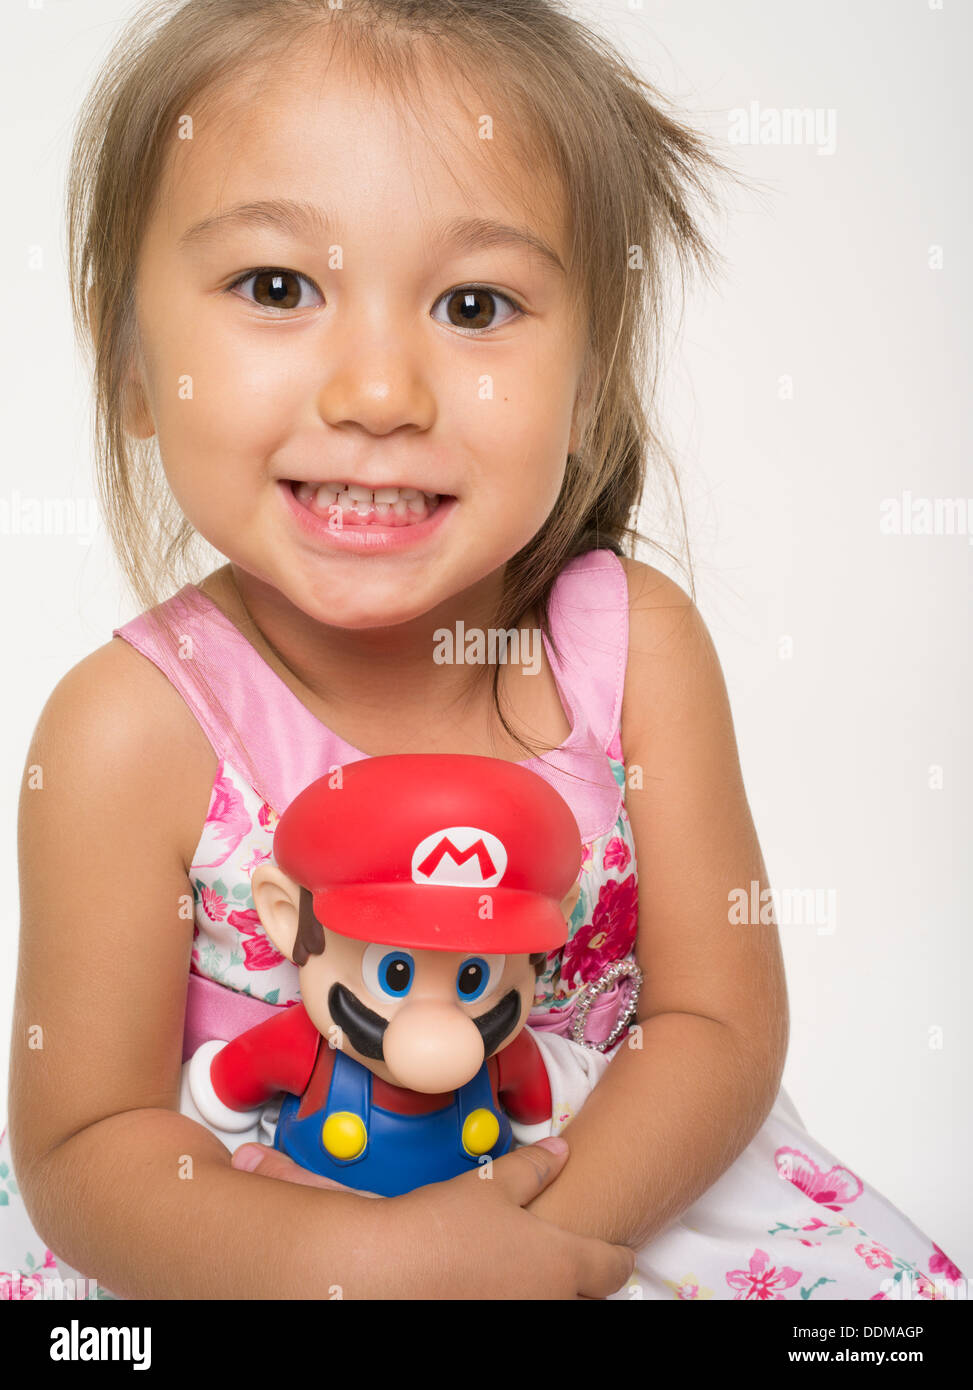 Nintendo Super Mario Toy with Japanese girl Stock Photo